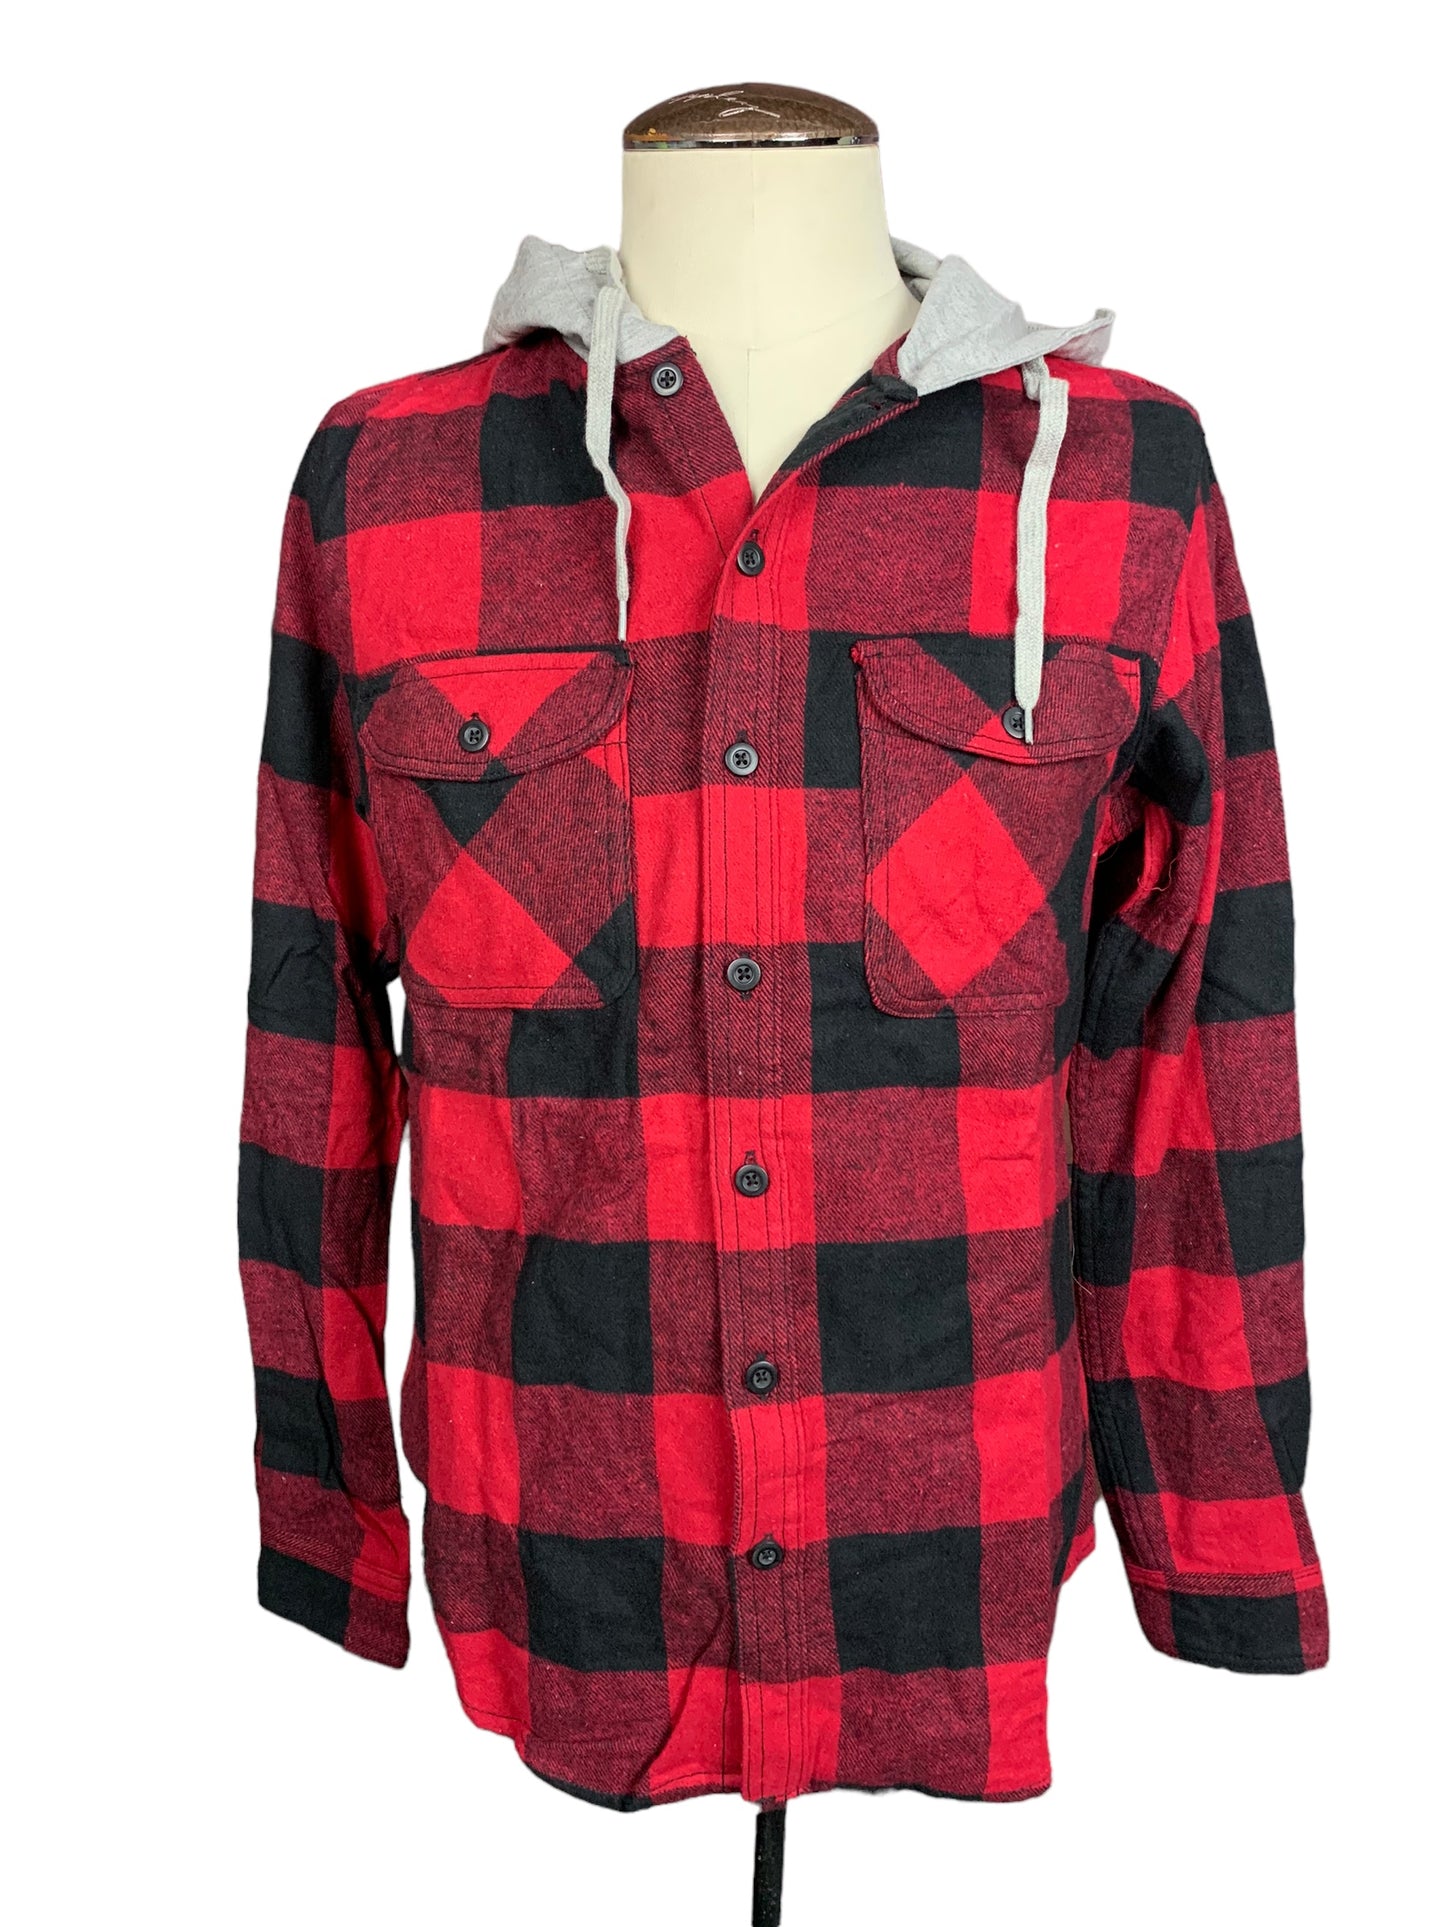 My Chemical Romance Hooded Flannel Shirt Custom Rework M